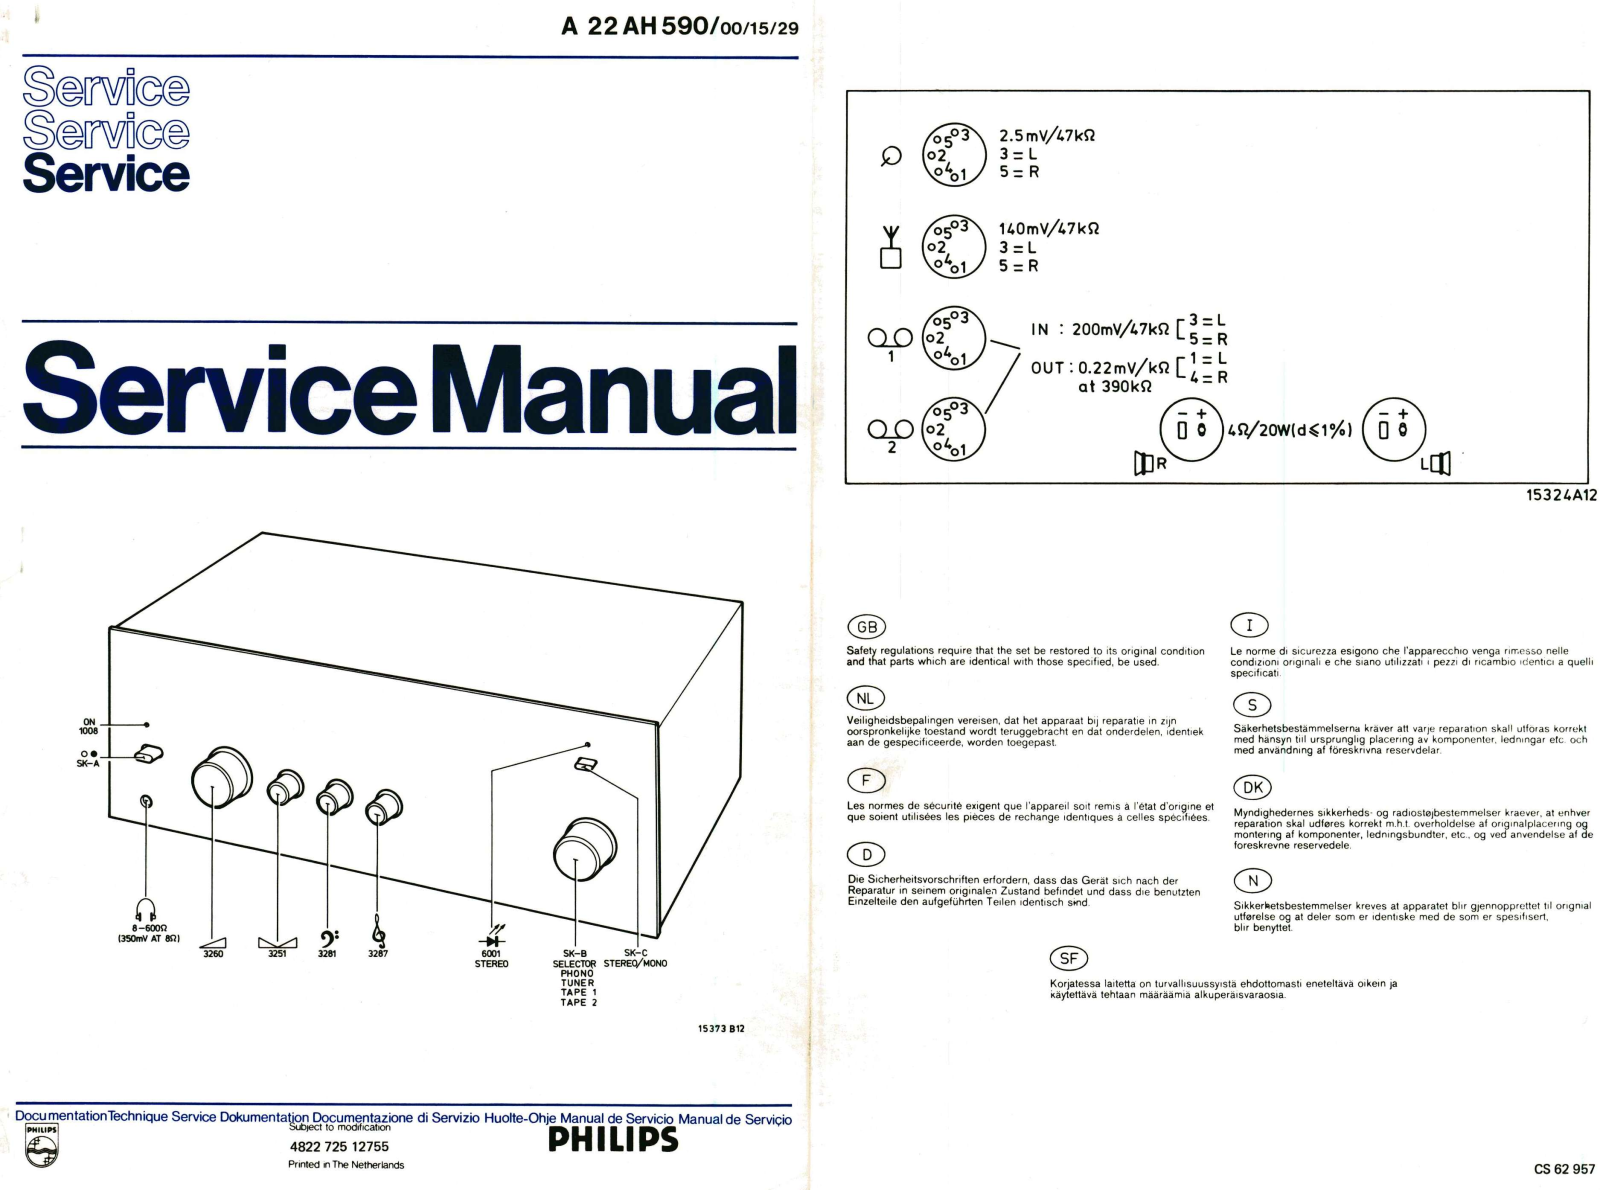 Philips AH-590 Service manual